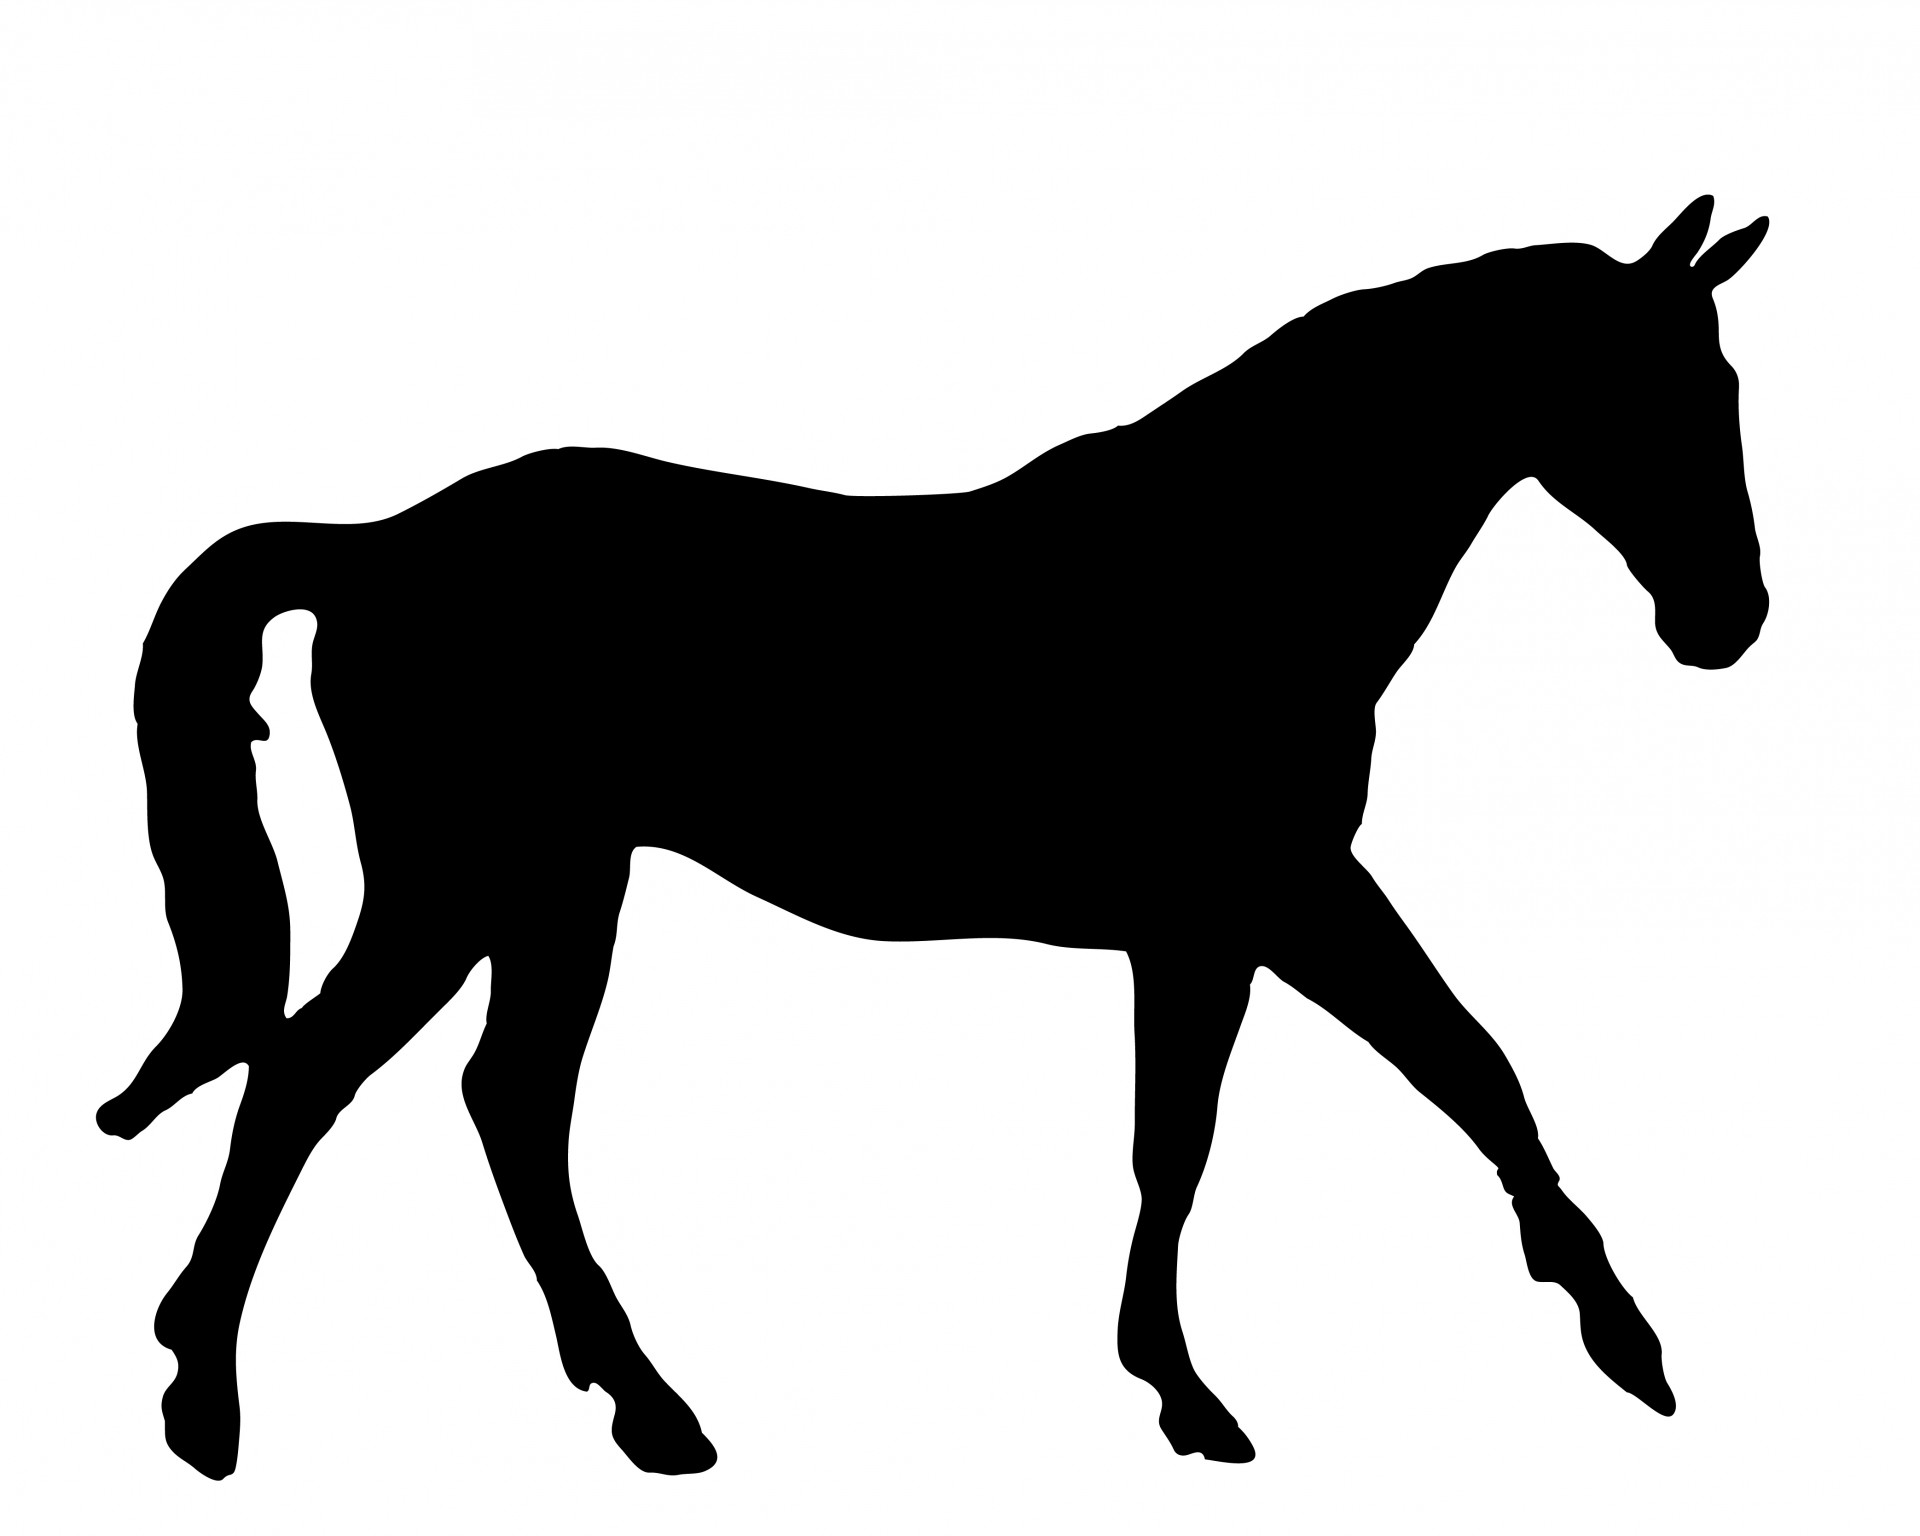 Black Horse Silhouette Images - Public Domain Pictures - Page 1